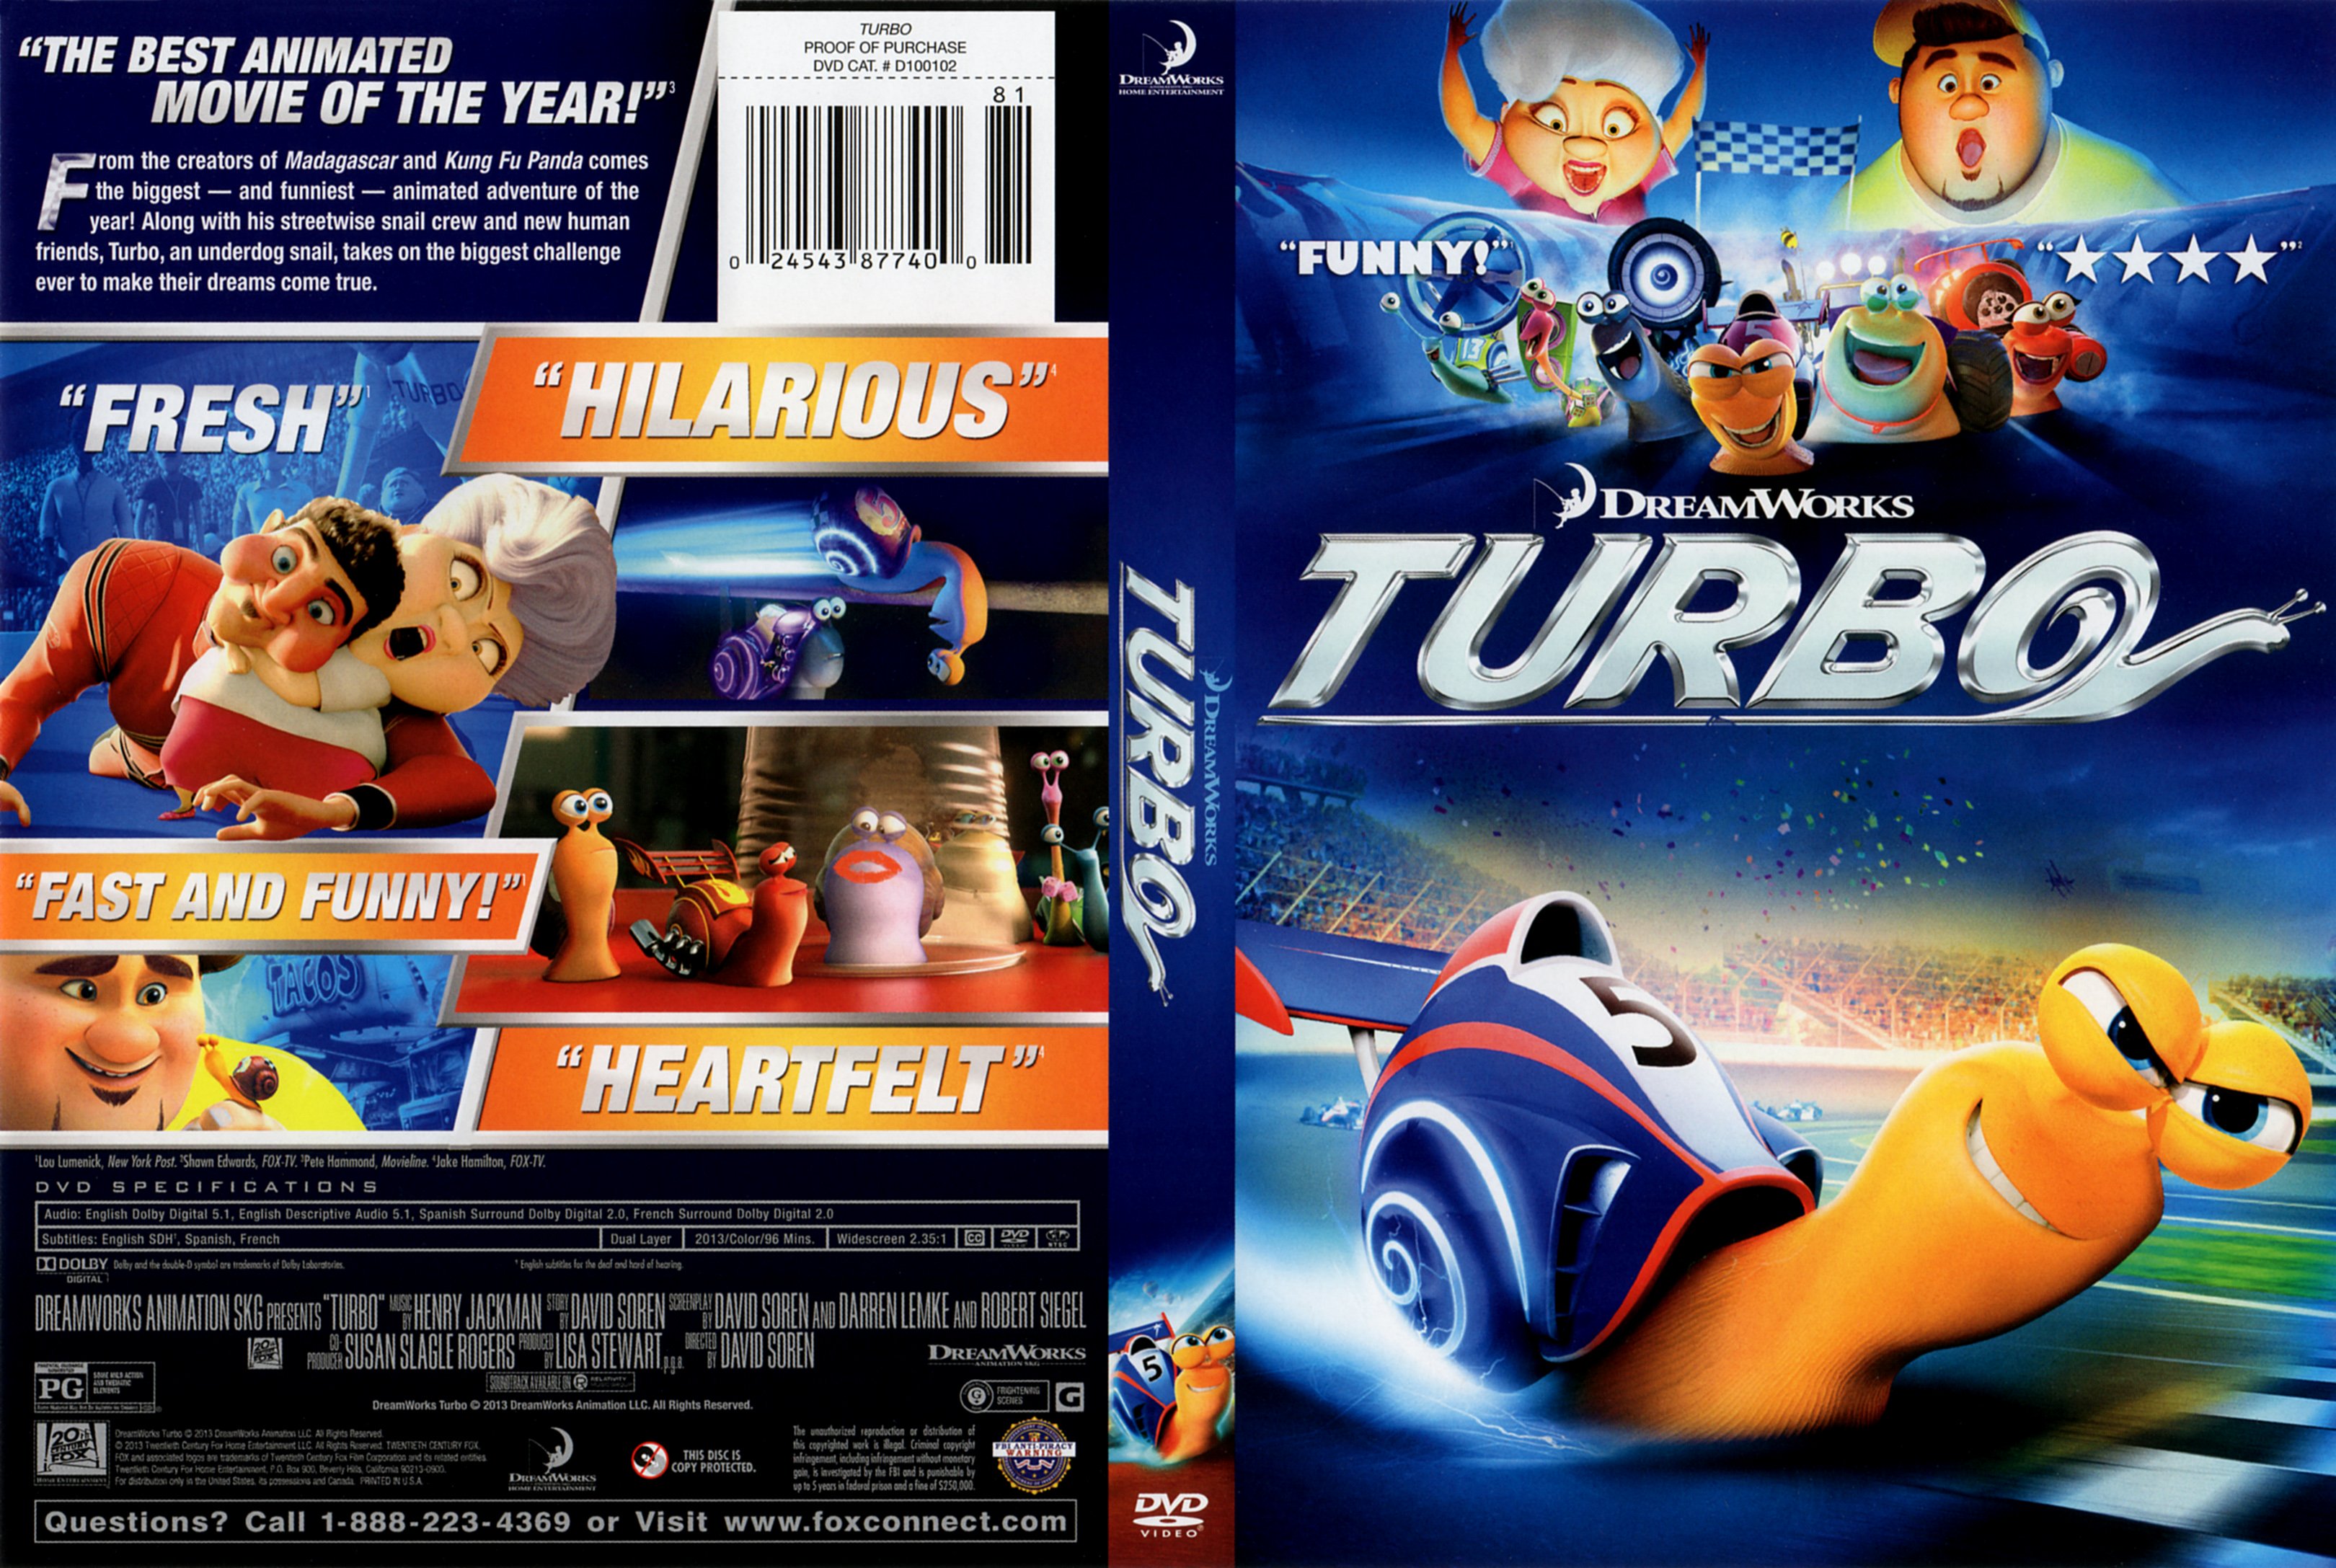 Jaquette DVD Turbo Zone 1